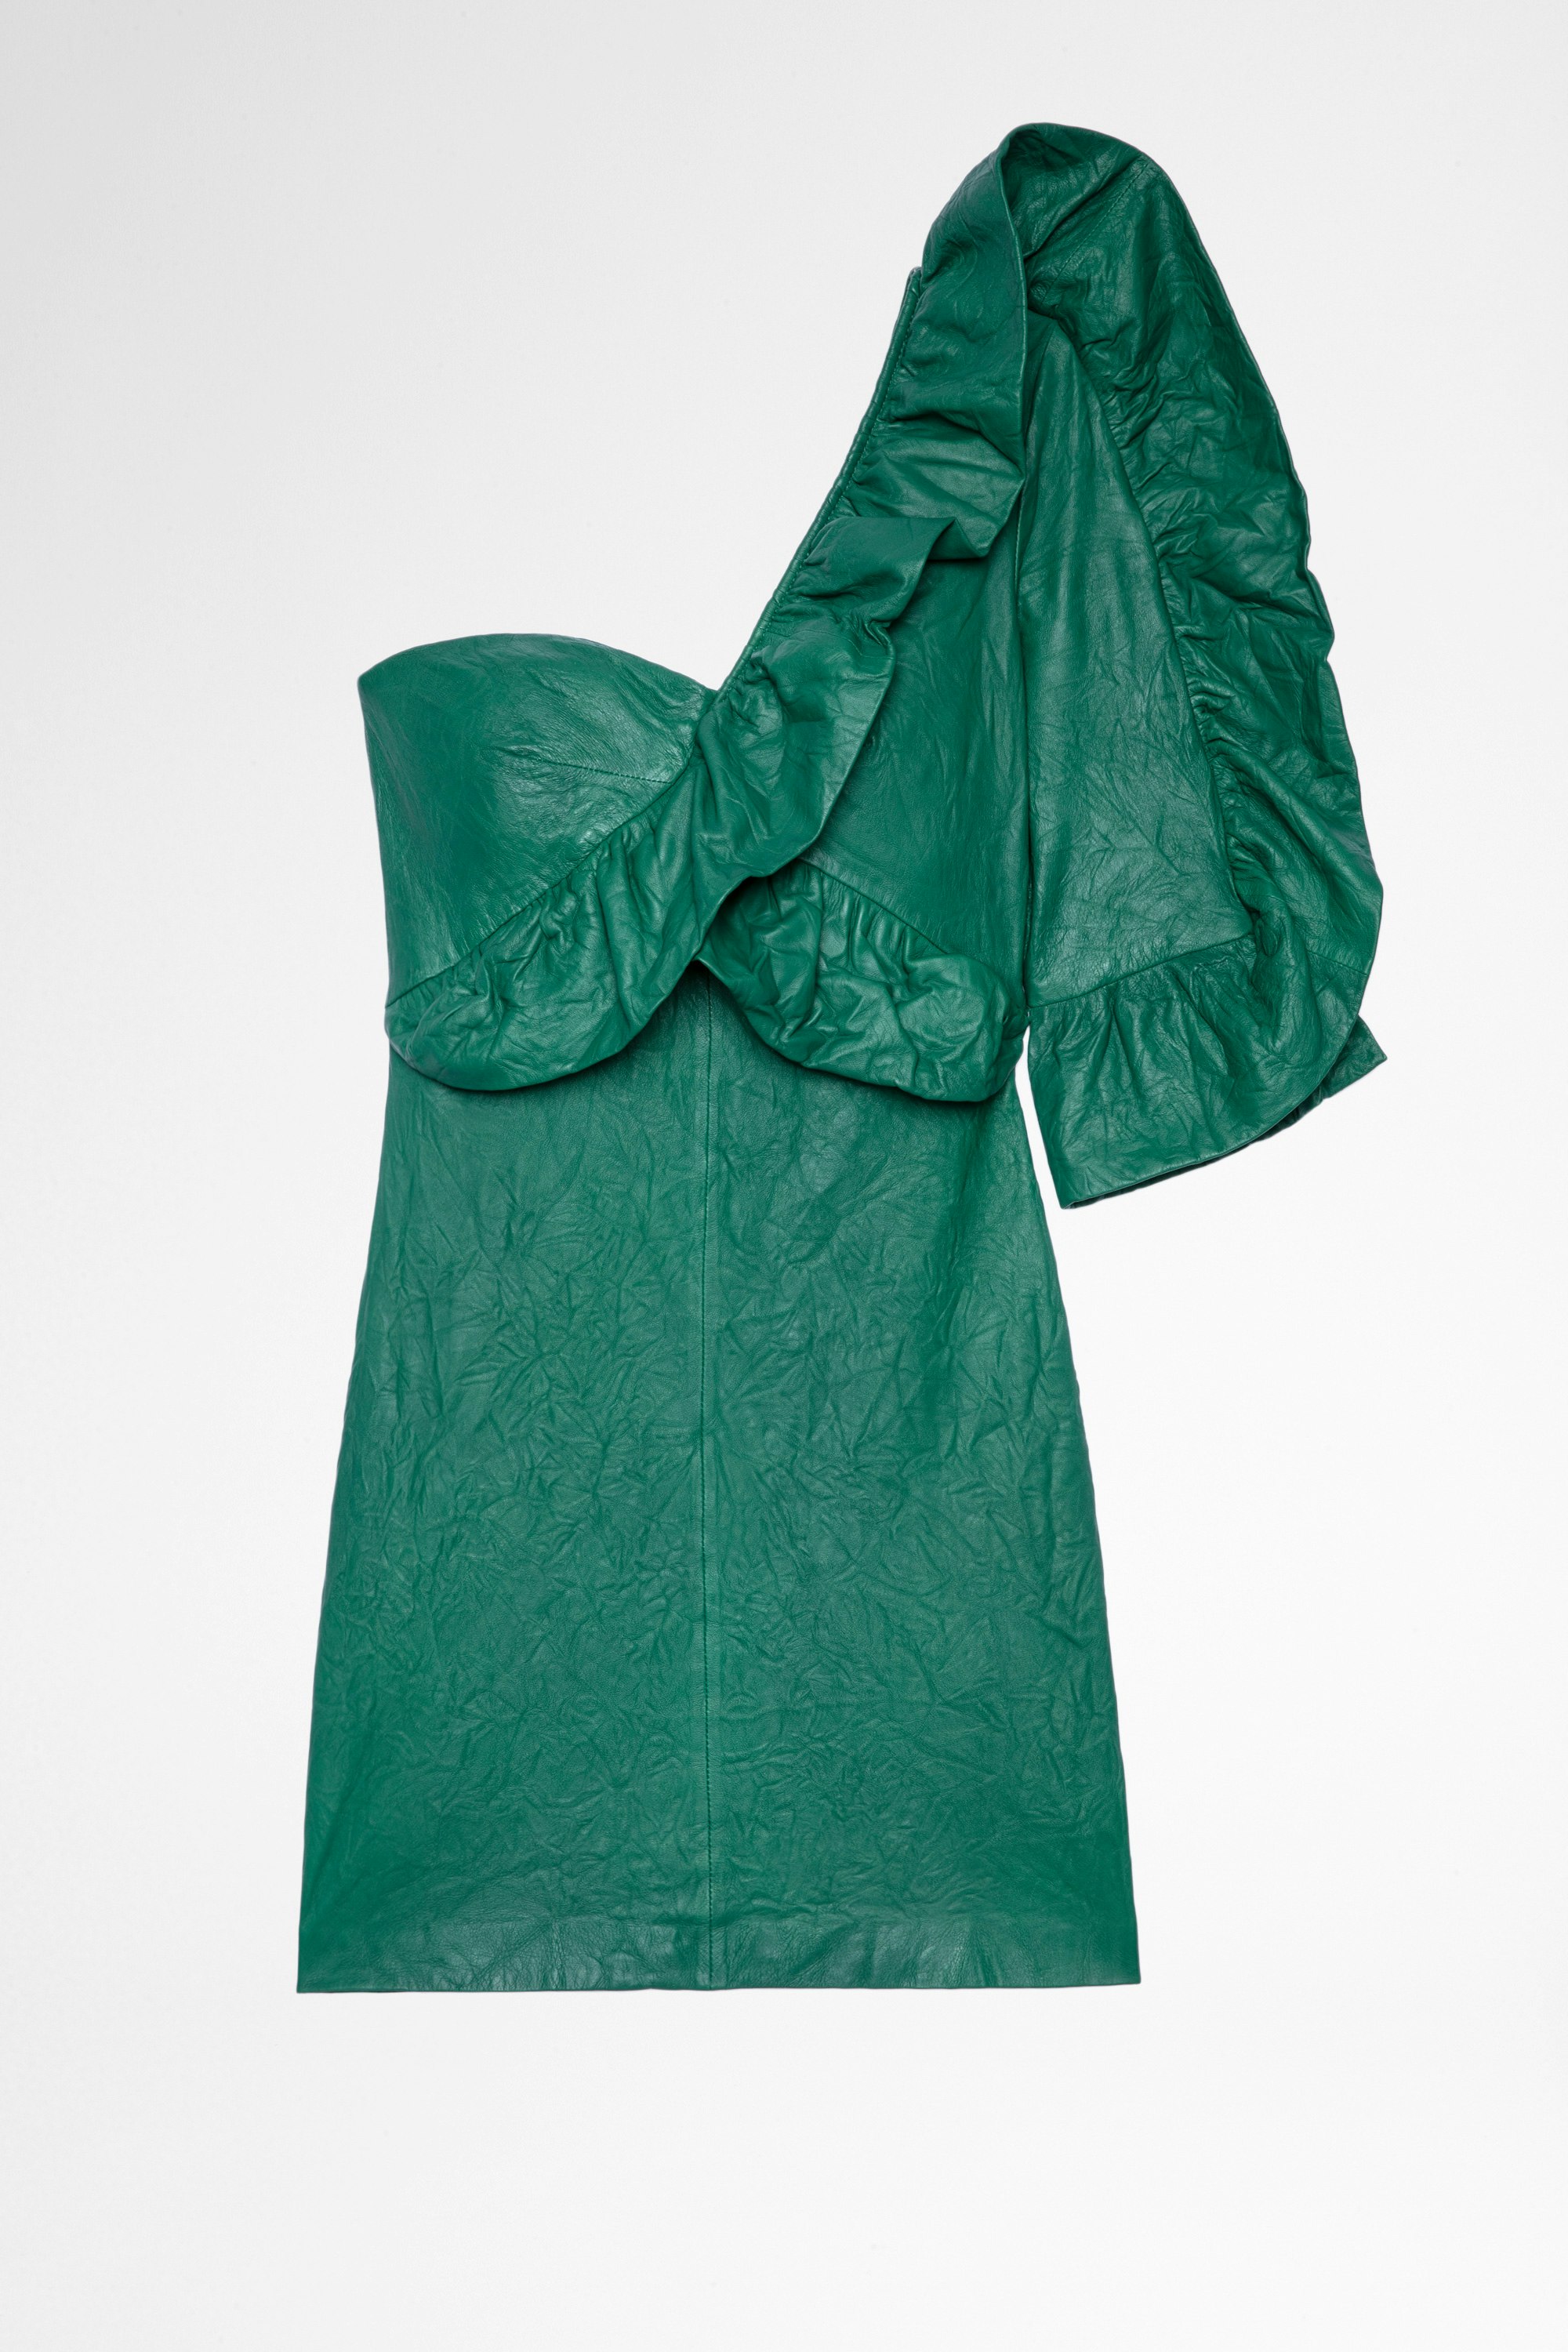 Rainbow Dress Crinkled Leather Women's asymmetrical green dress in crinkled leather with ruffles